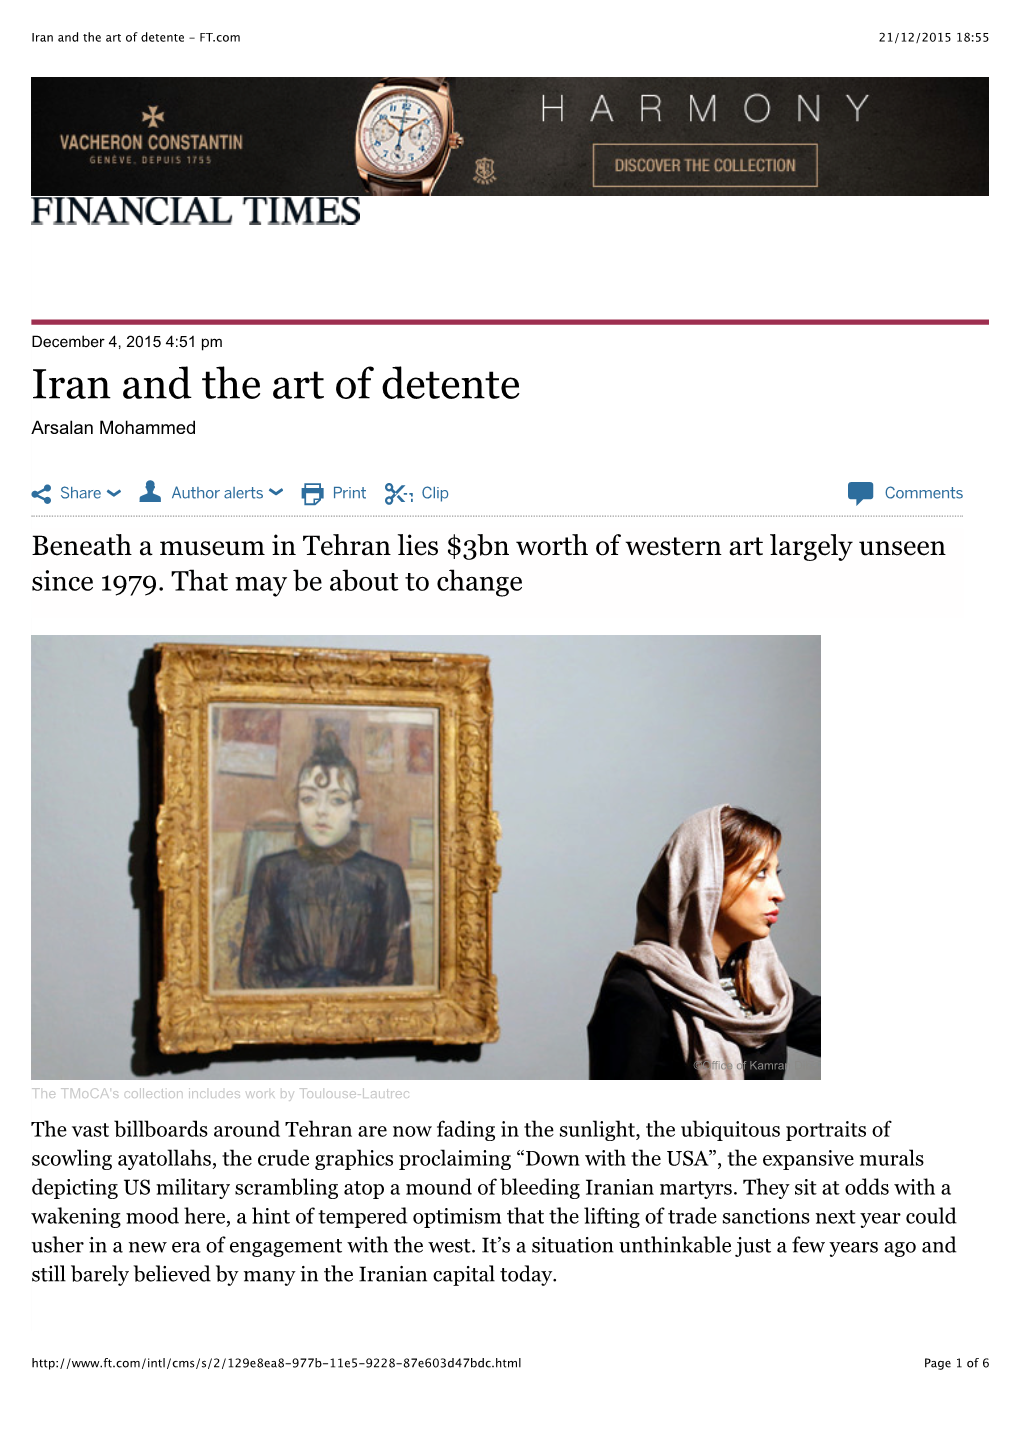 Iran and the Art of Detente - FT.Com 21/12/2015 18:55